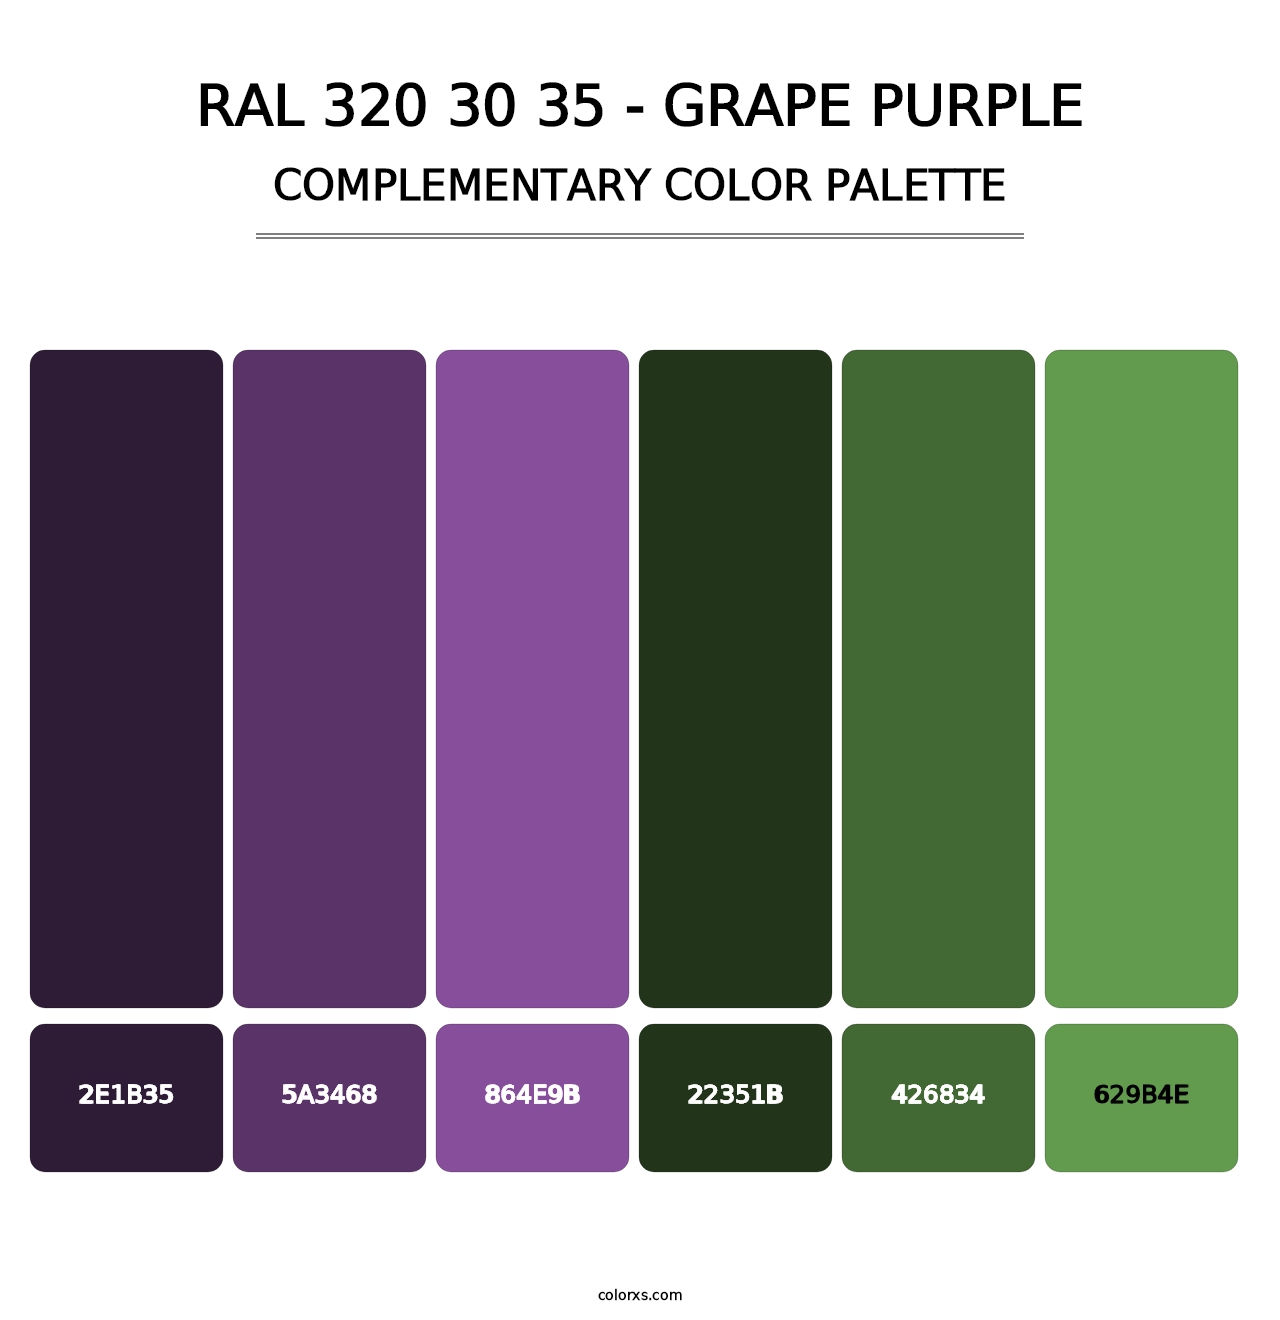 RAL 320 30 35 - Grape Purple - Complementary Color Palette